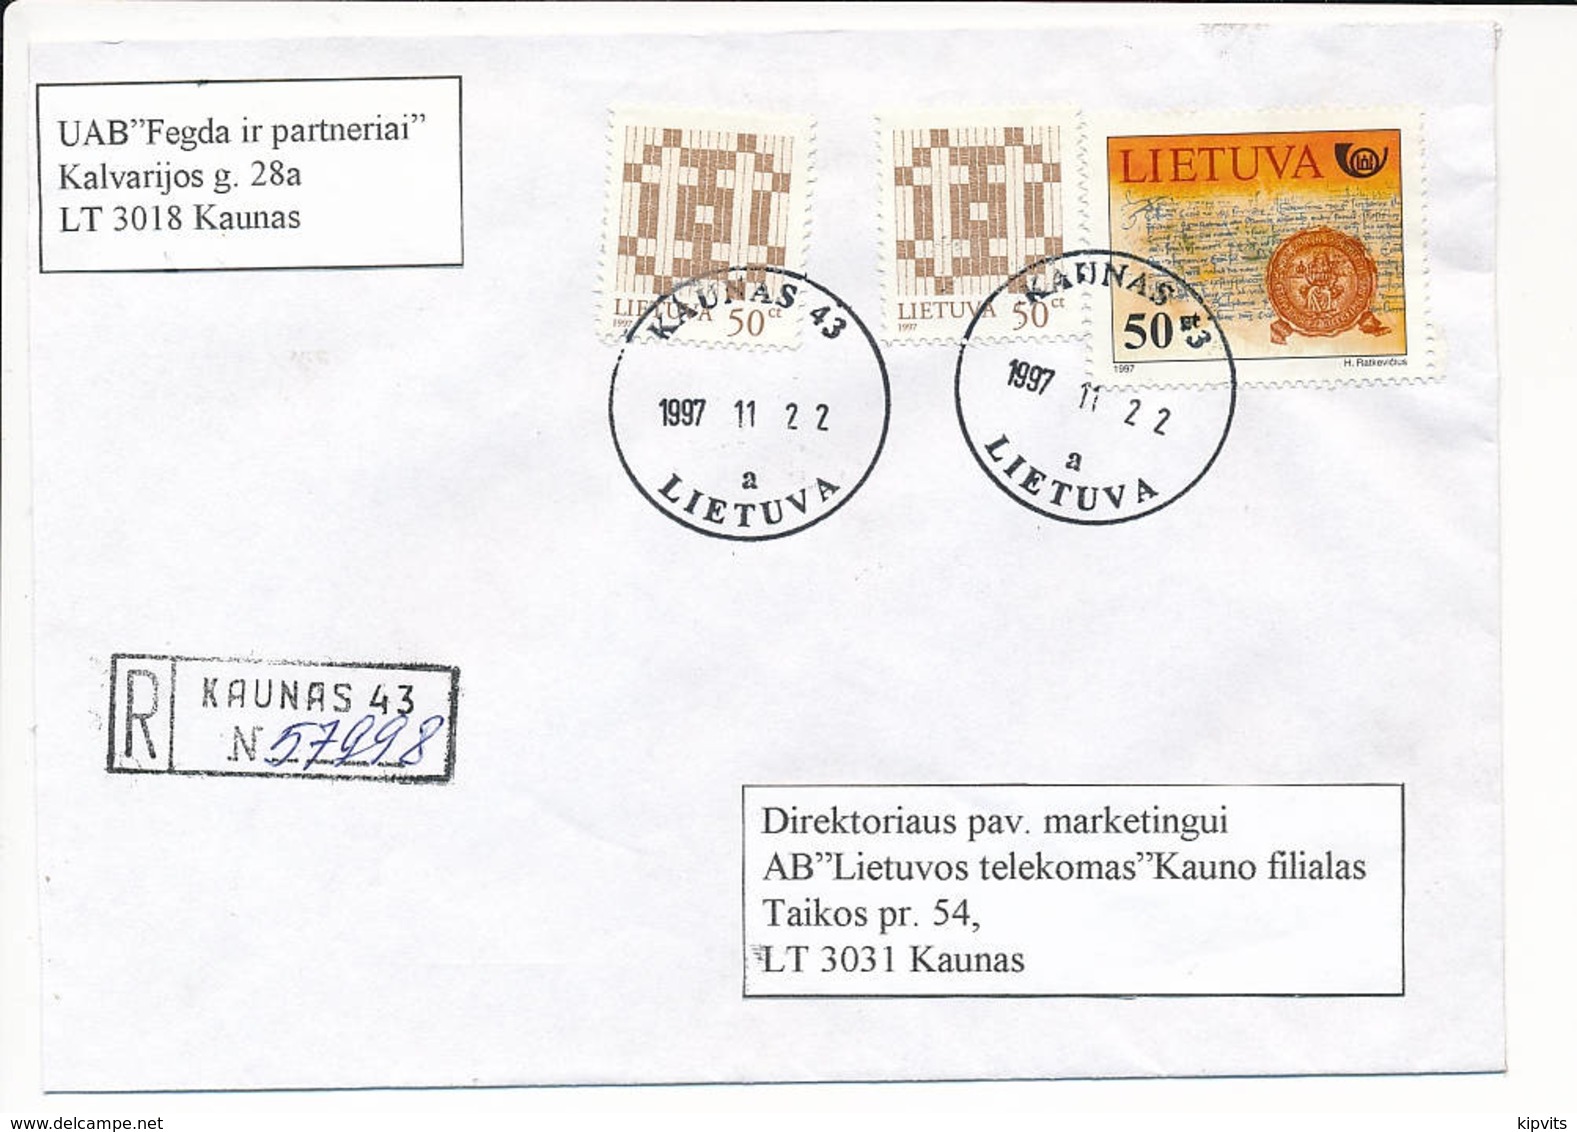 Registered Commercial Cover / Postal Service History - 22 November 1997 Kaunas 43 - Lithuania